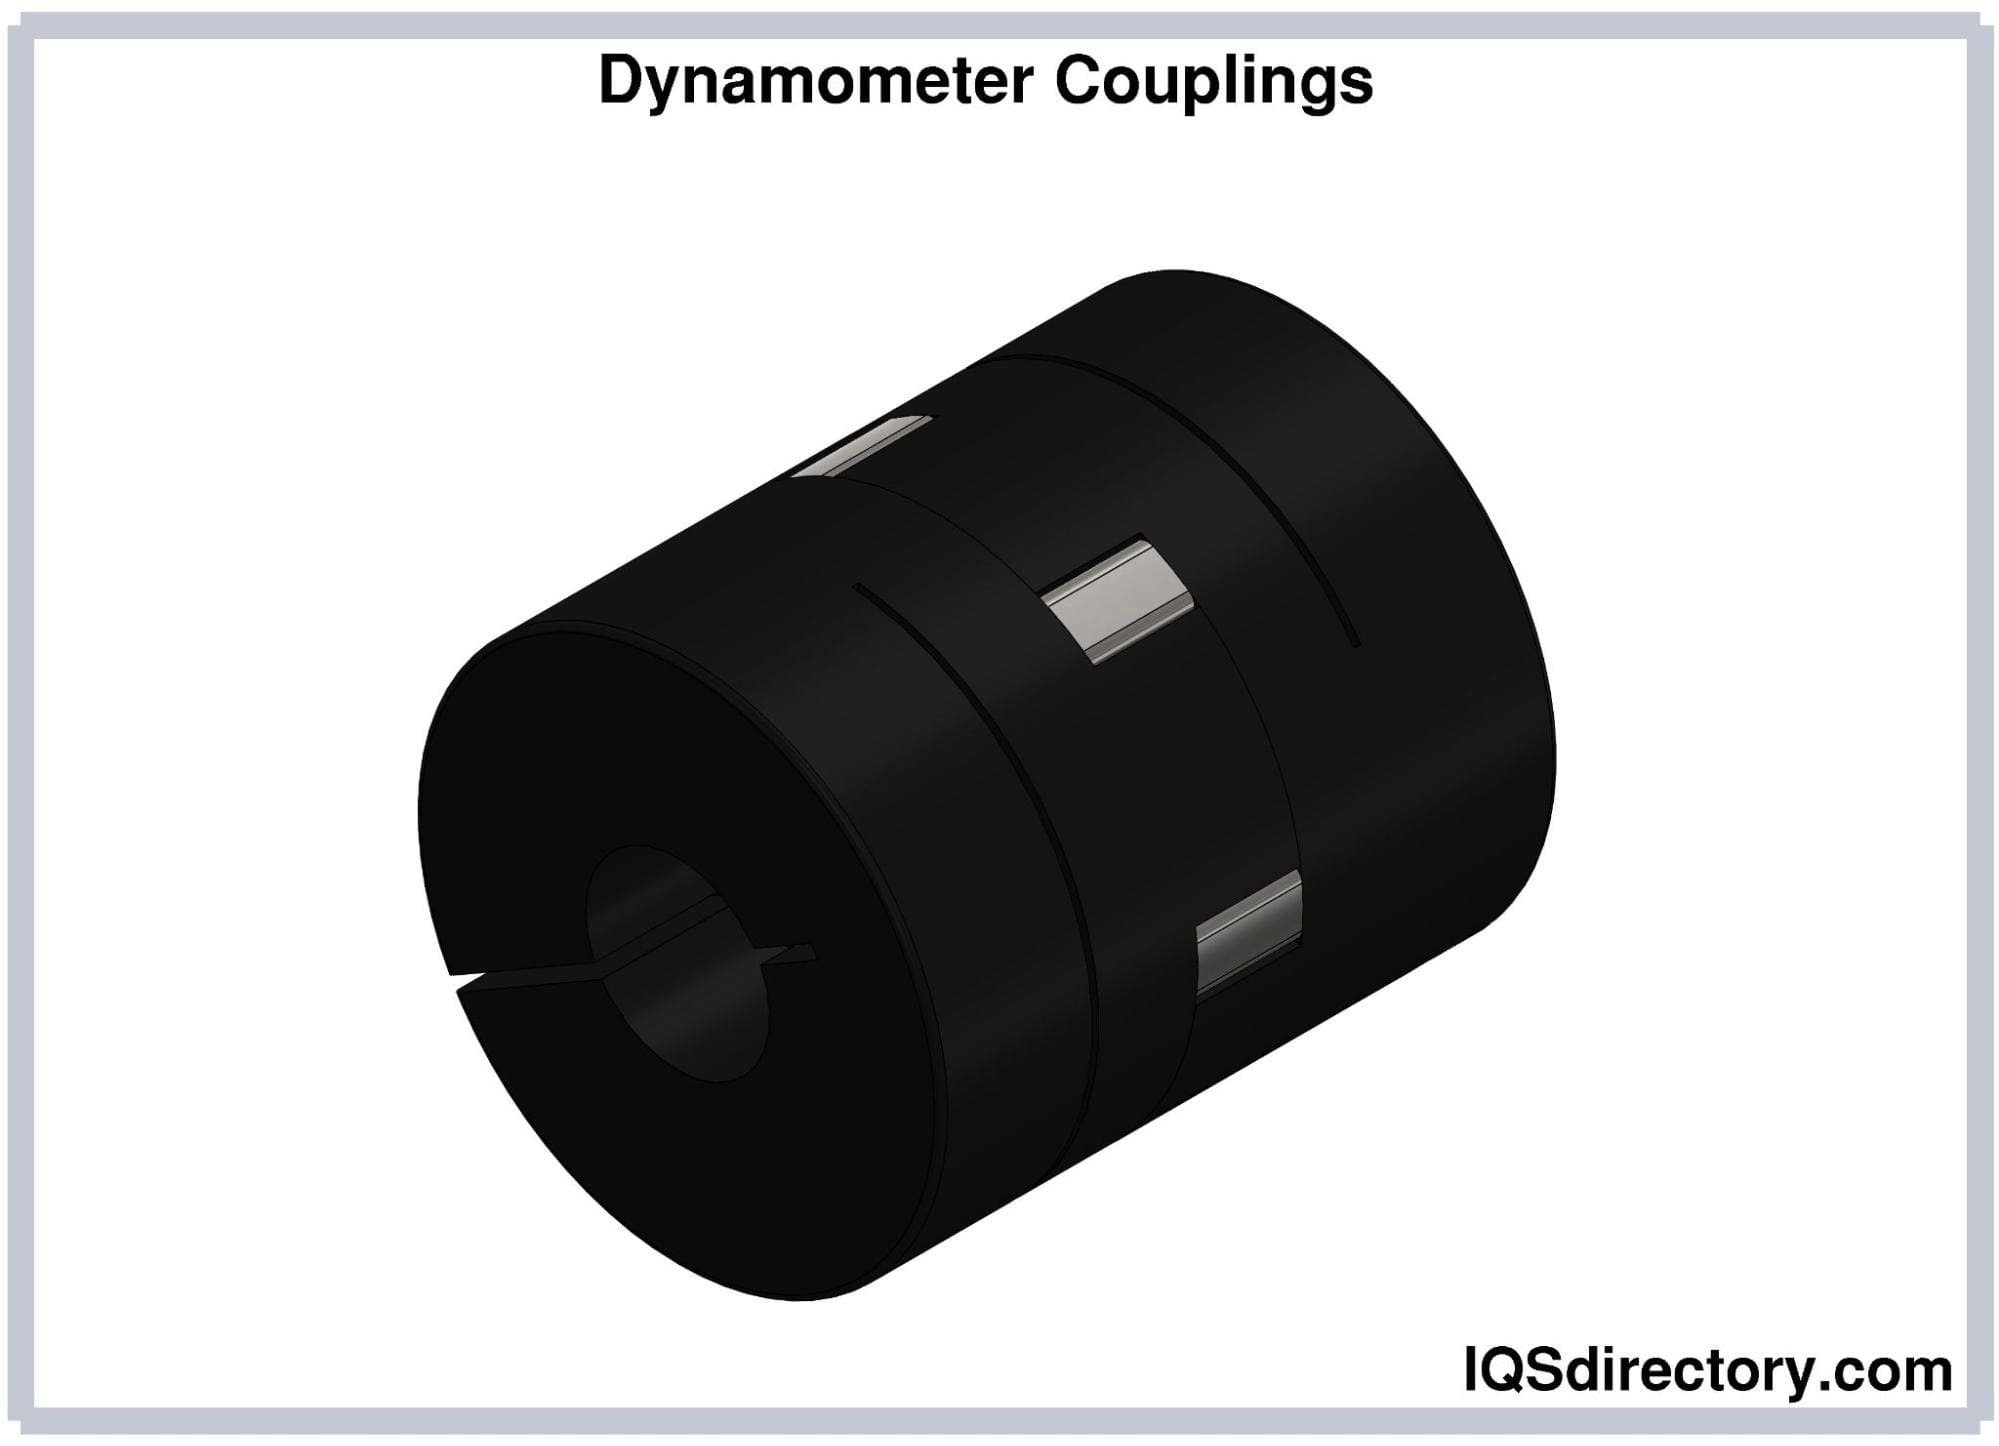 Dynamometer Couplings